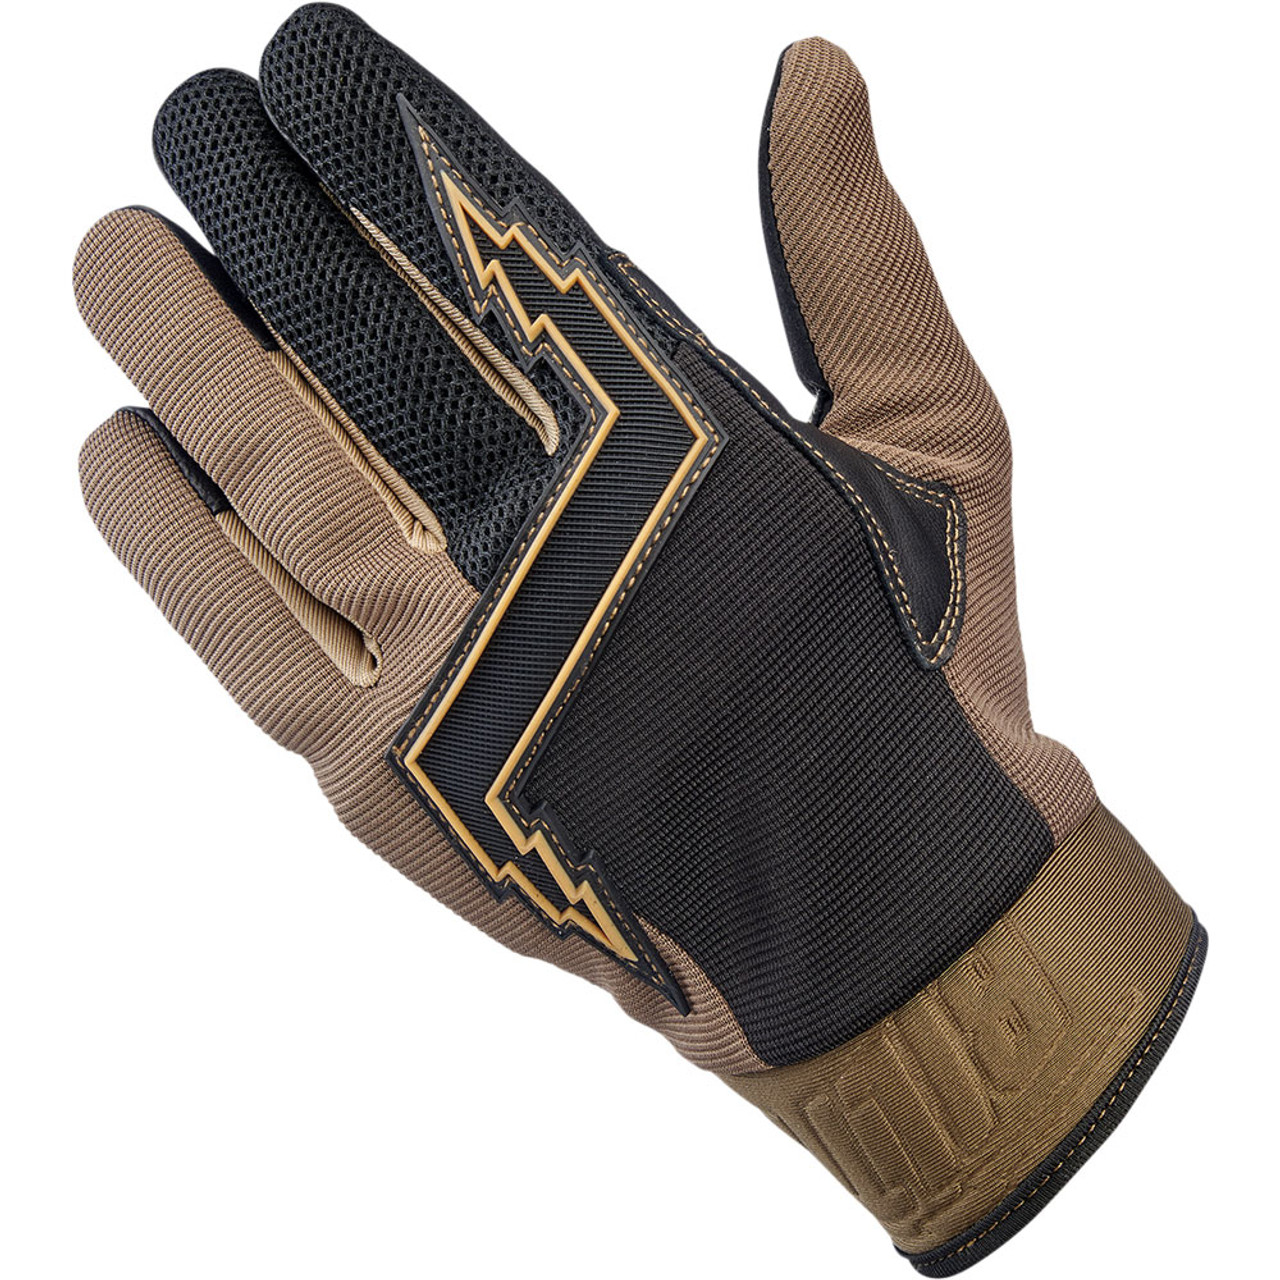 C Street 301-LG Rubber Coated Gloves